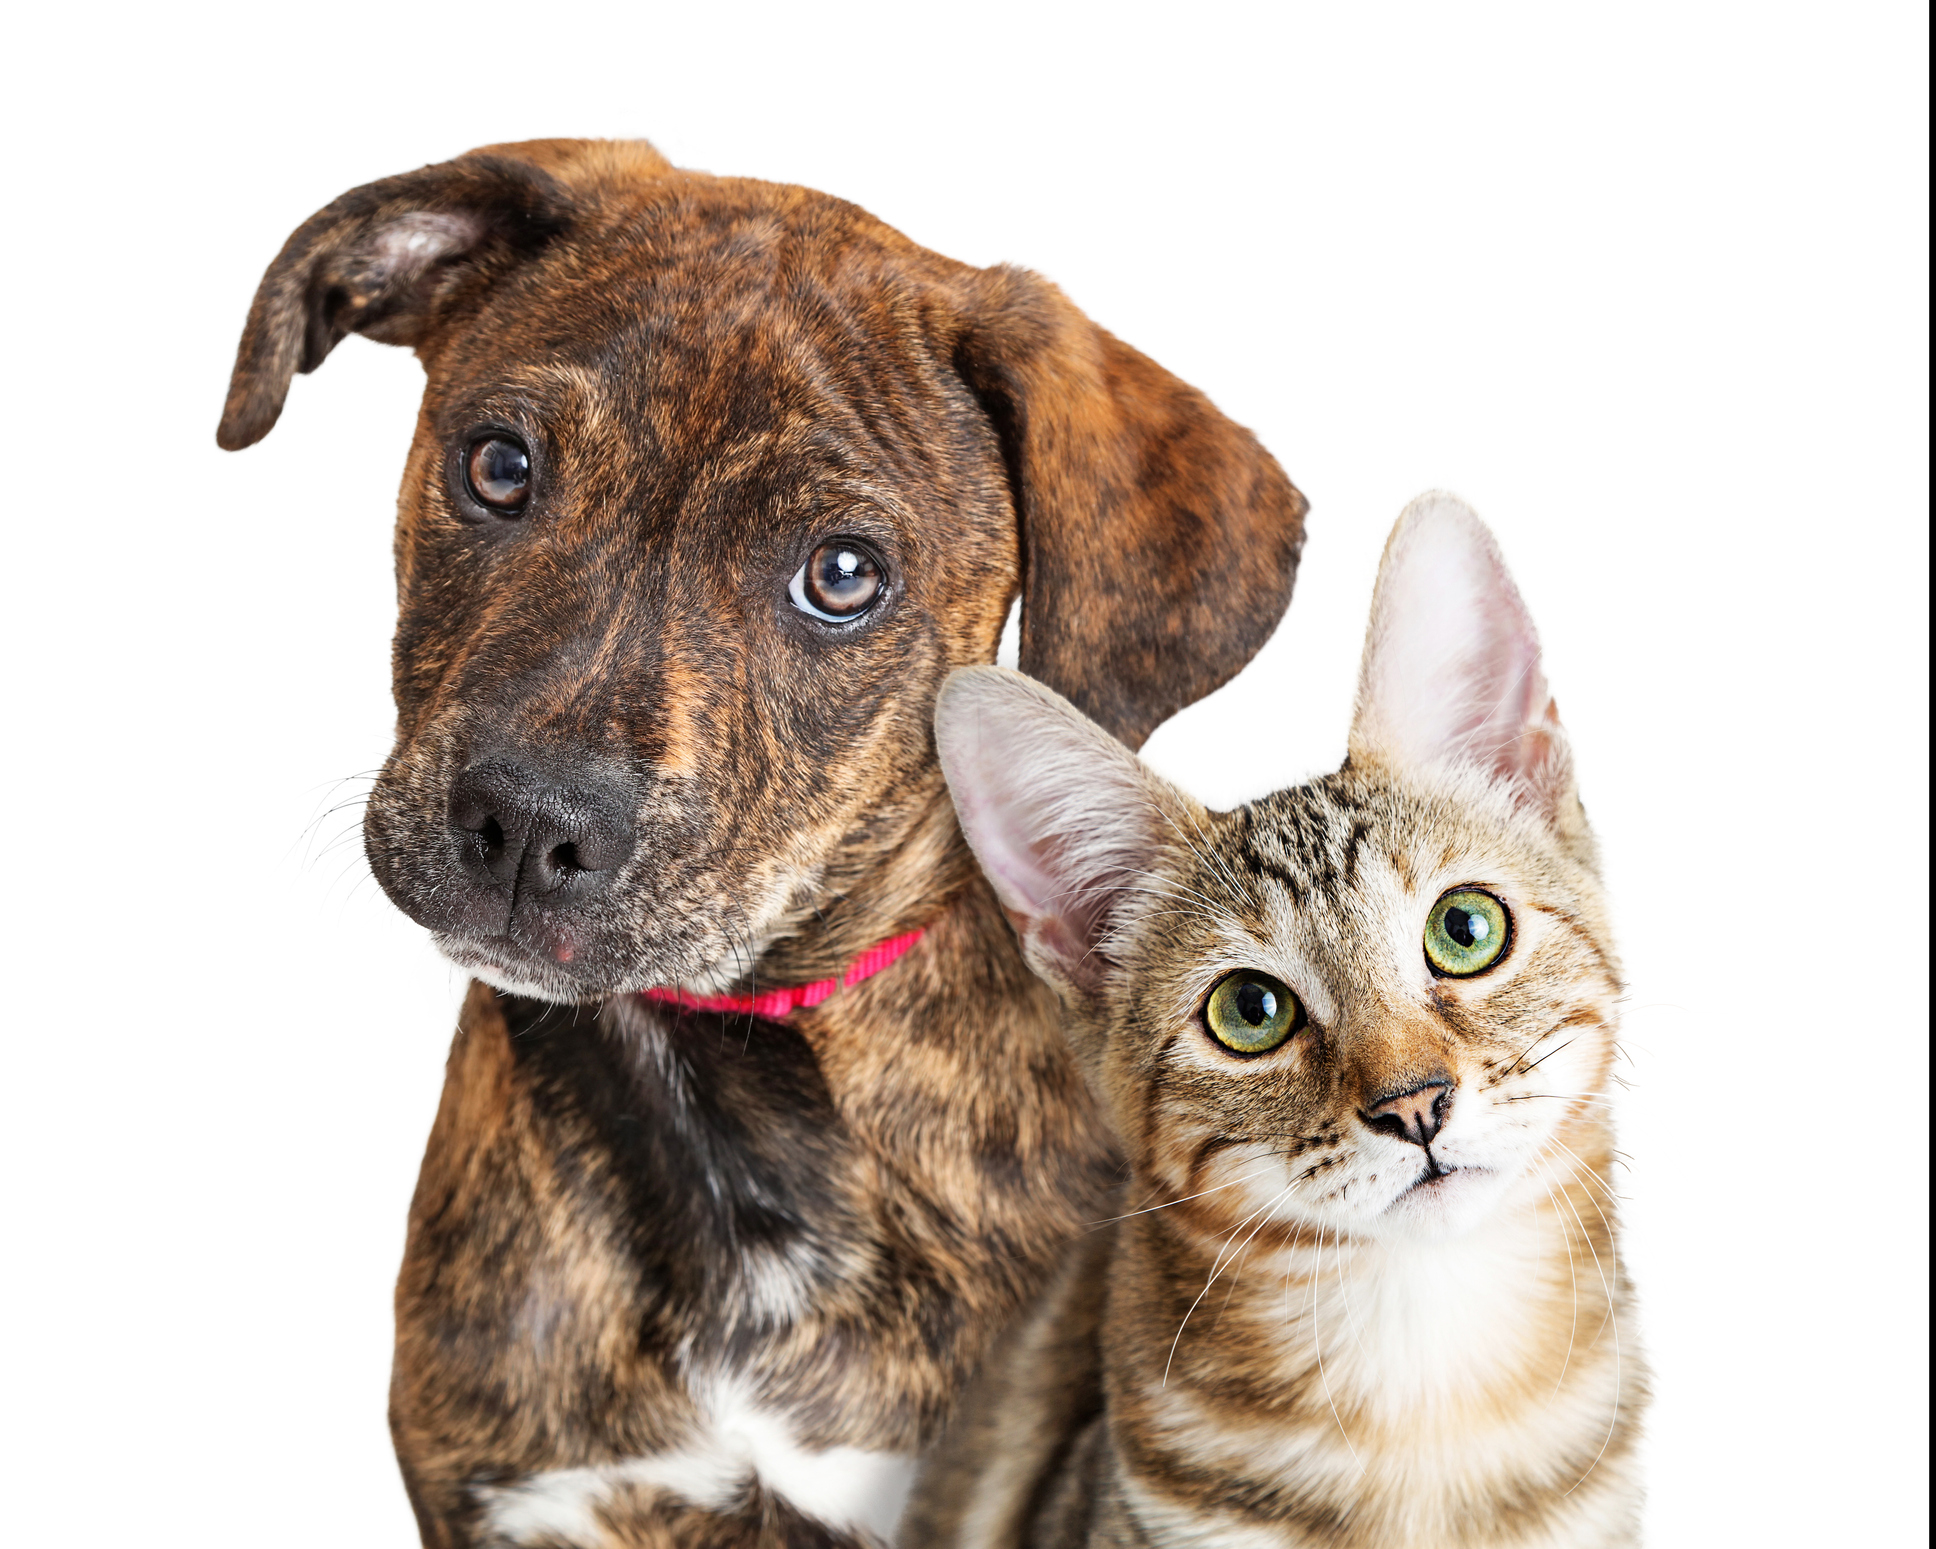 St. Louis Pet Adoption: Humane Society of Missouri